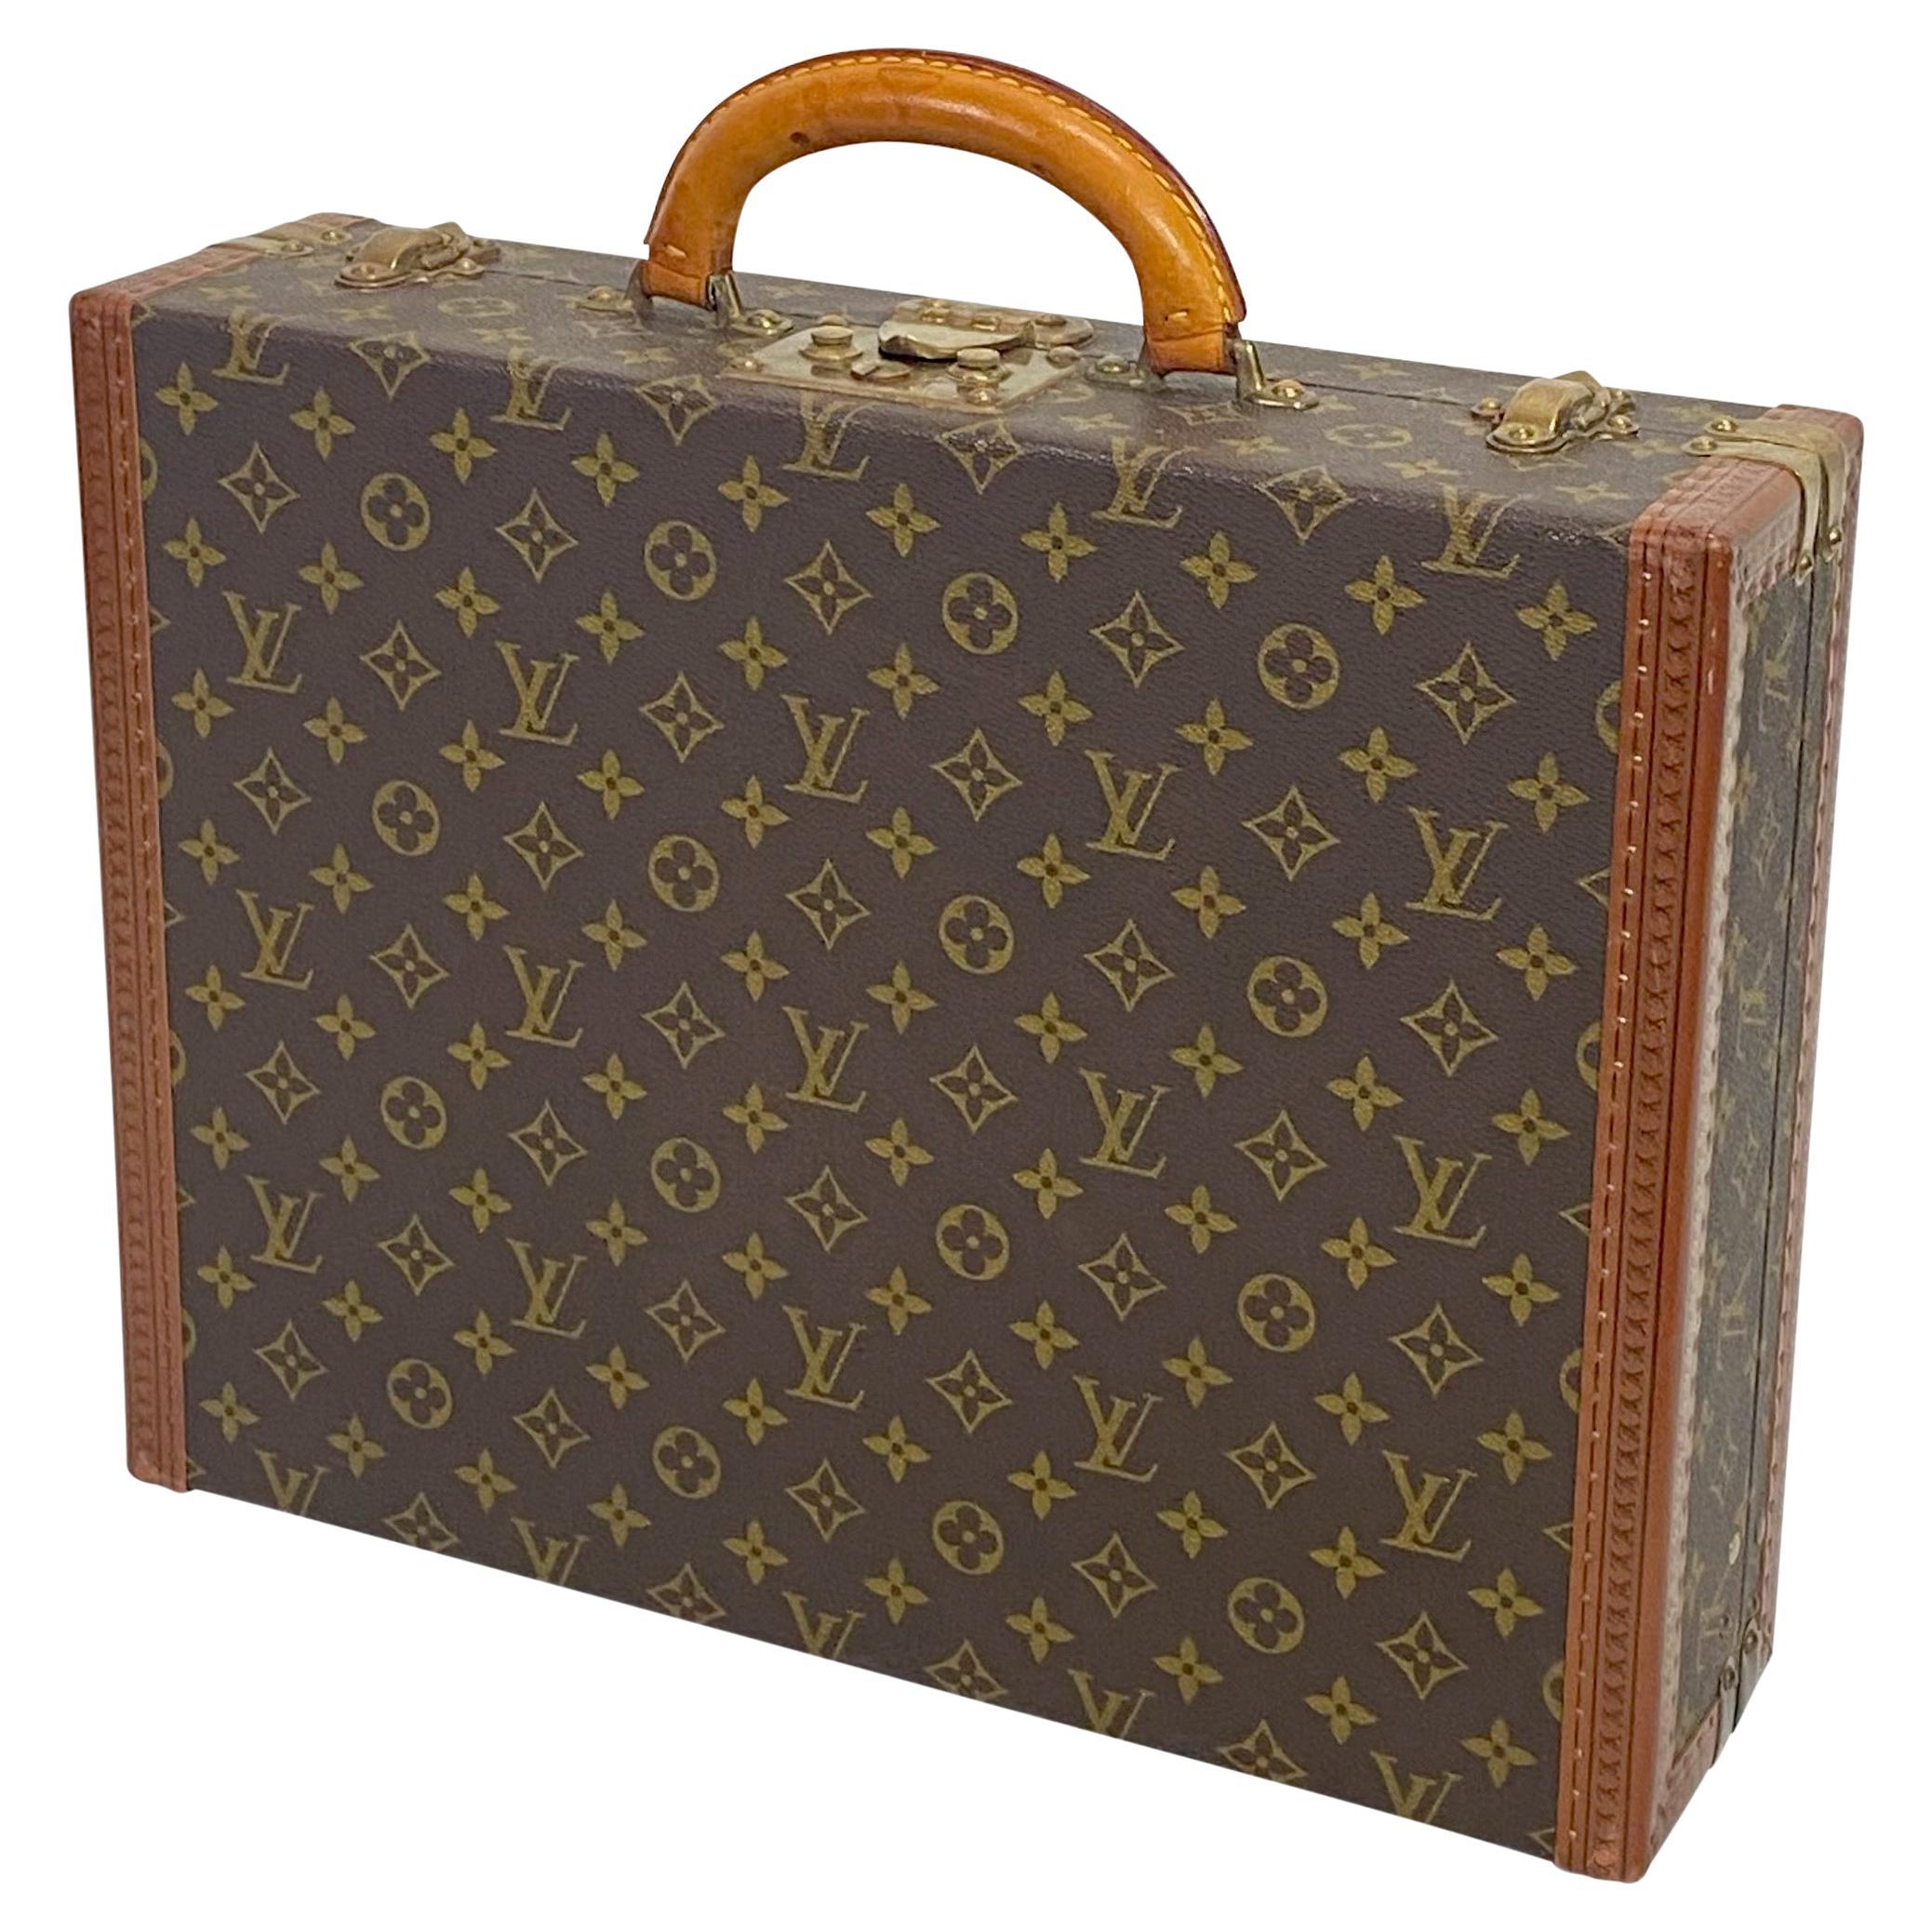 When did Louis Vuitton start making luggage?